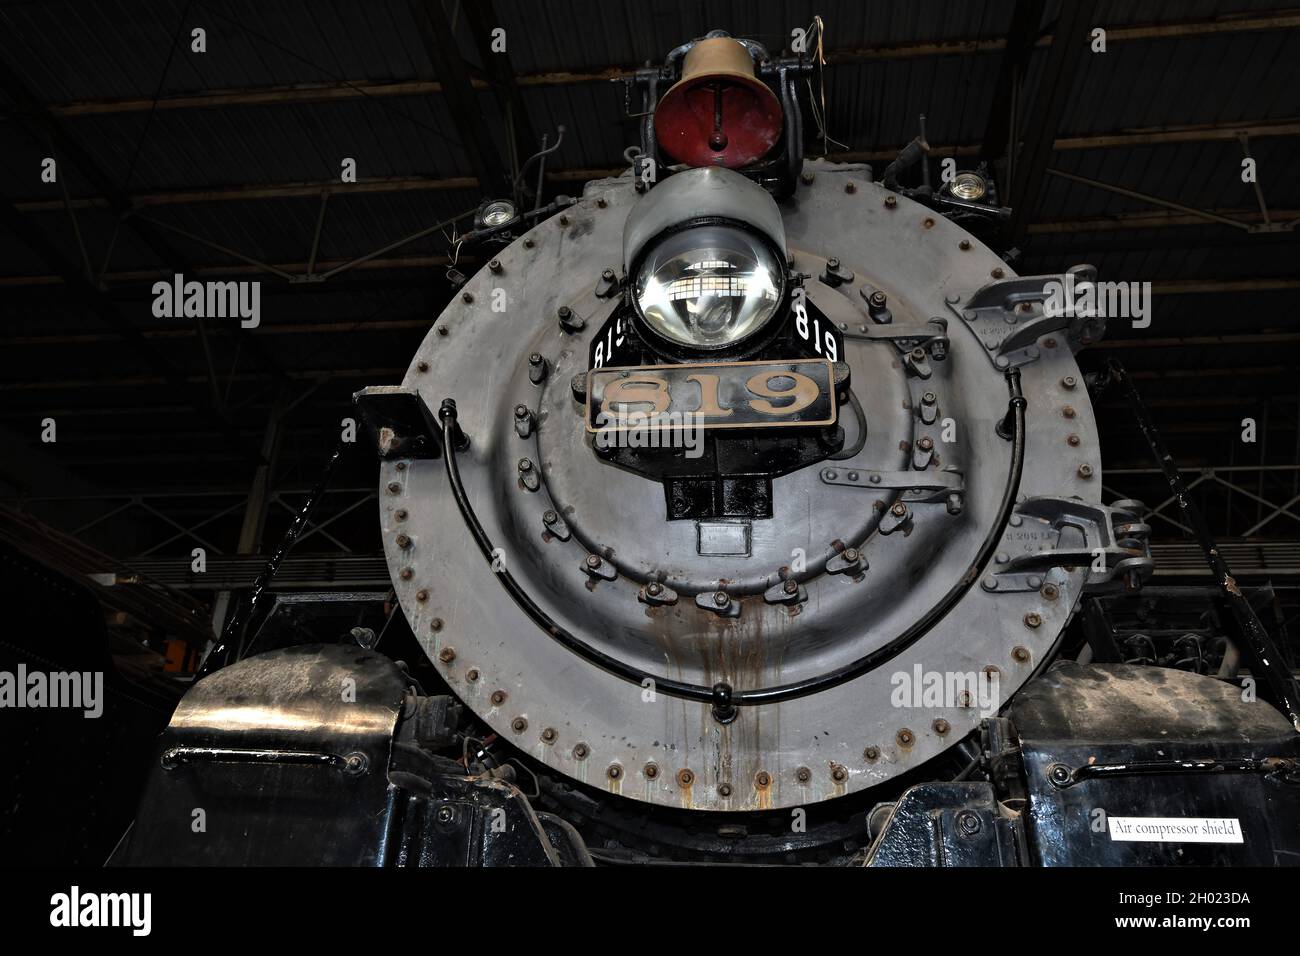 The St. Louis Southwestern, No. 819 steam locomotive. Stock Photo